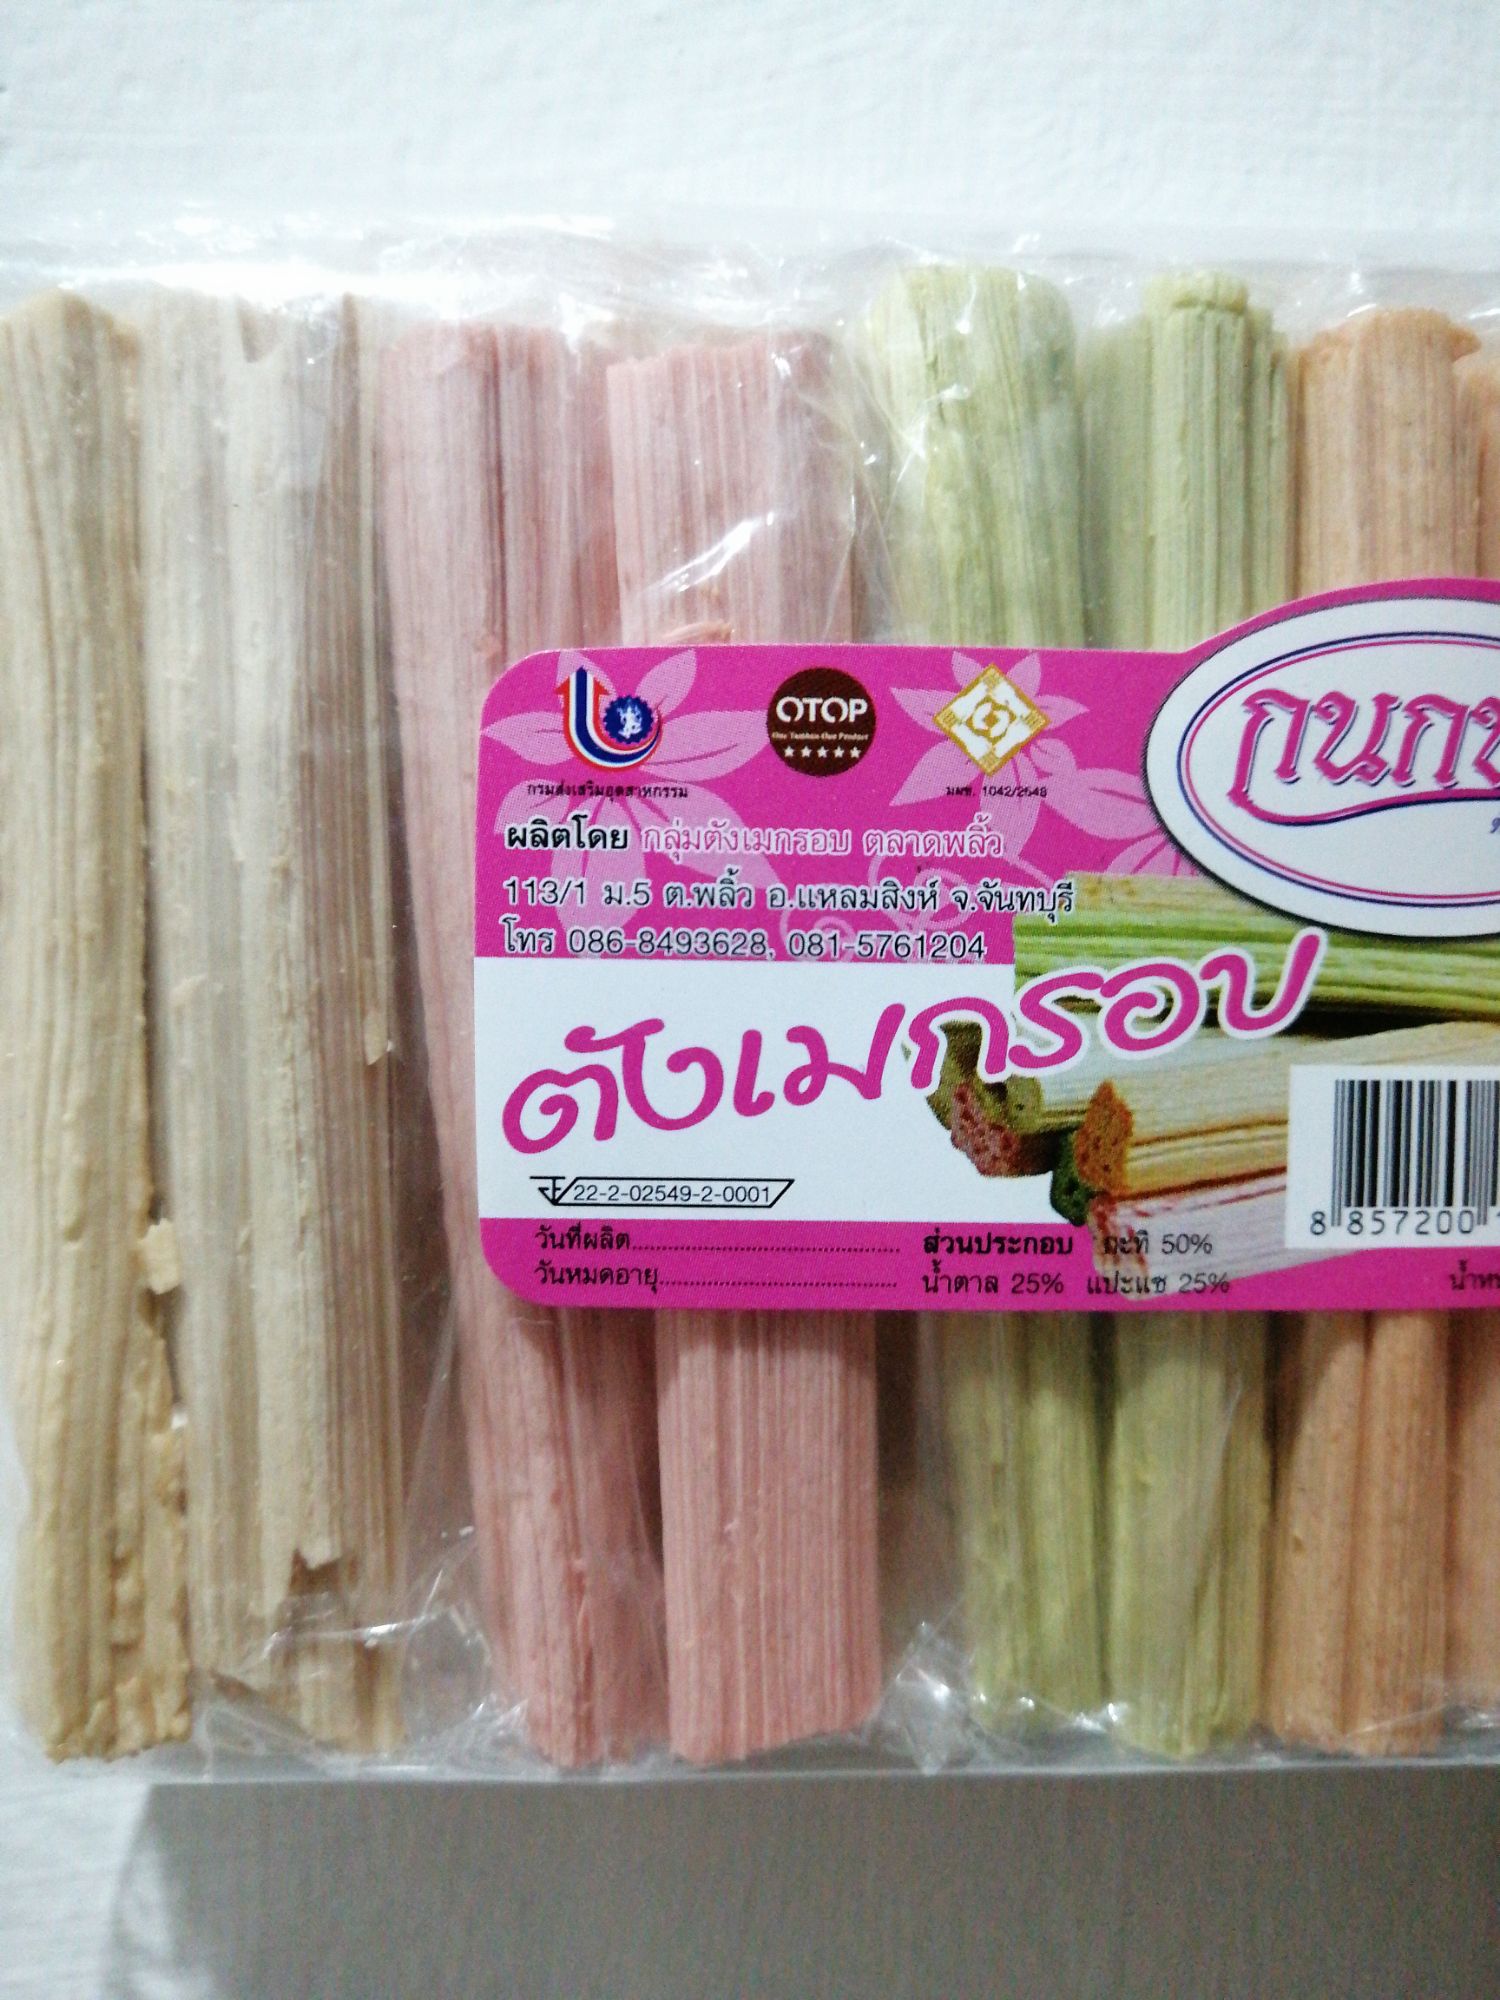 (2pac*20) Candy sticks Thai : ตังเมกรอบ ตลาดพลิ้ว อ.แหลมสิงห์ จ.จันทบุรี